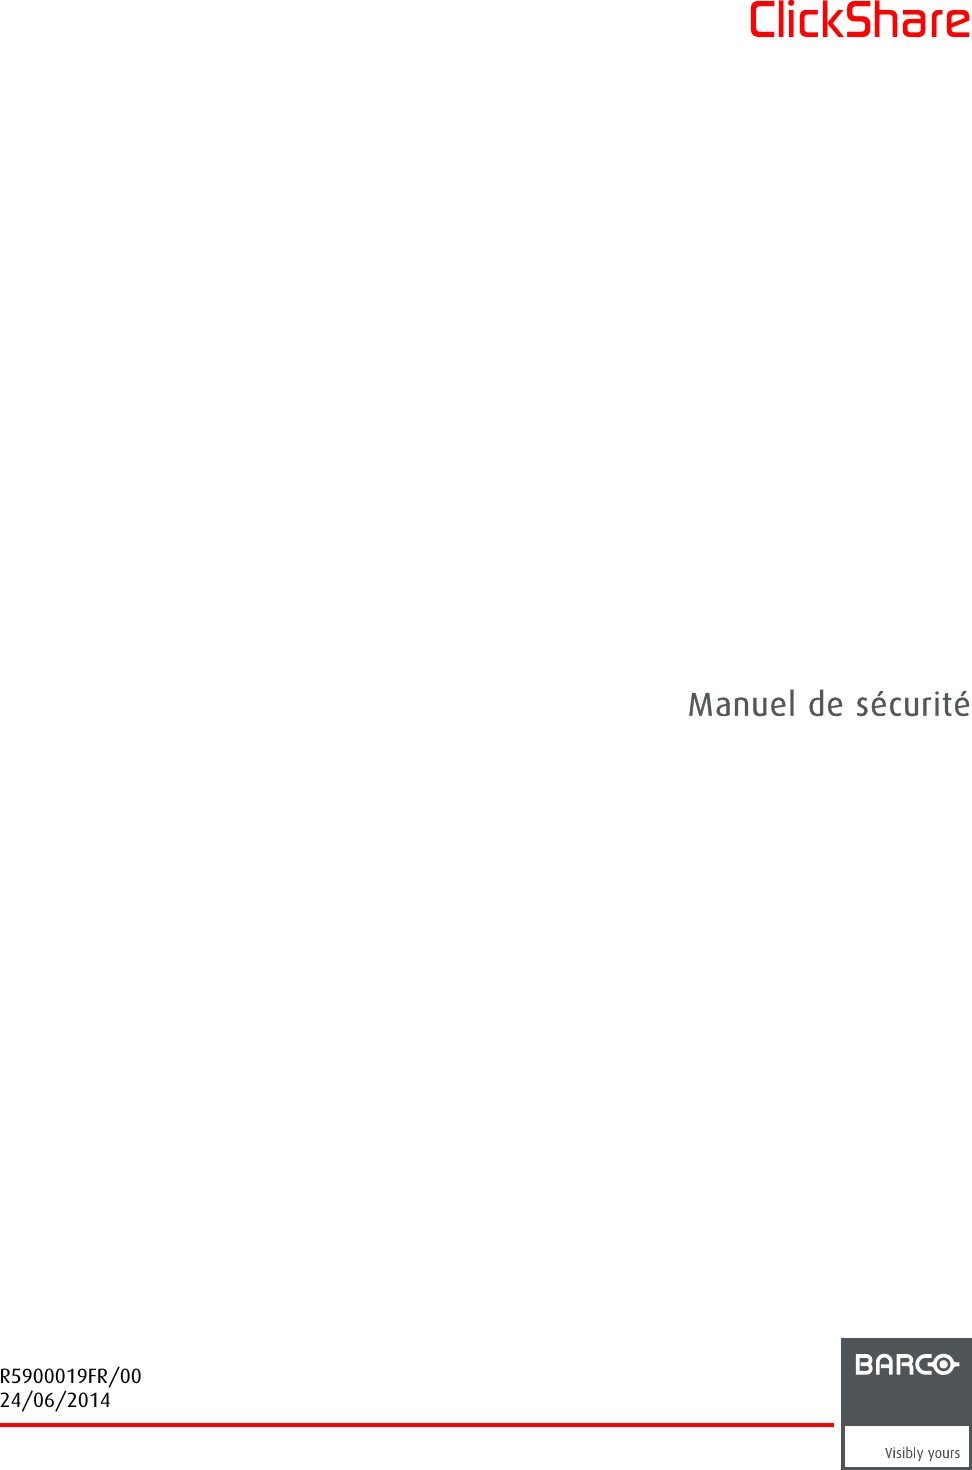 ClickShareManuel de sécuritéR5900019FR/0024/06/2014